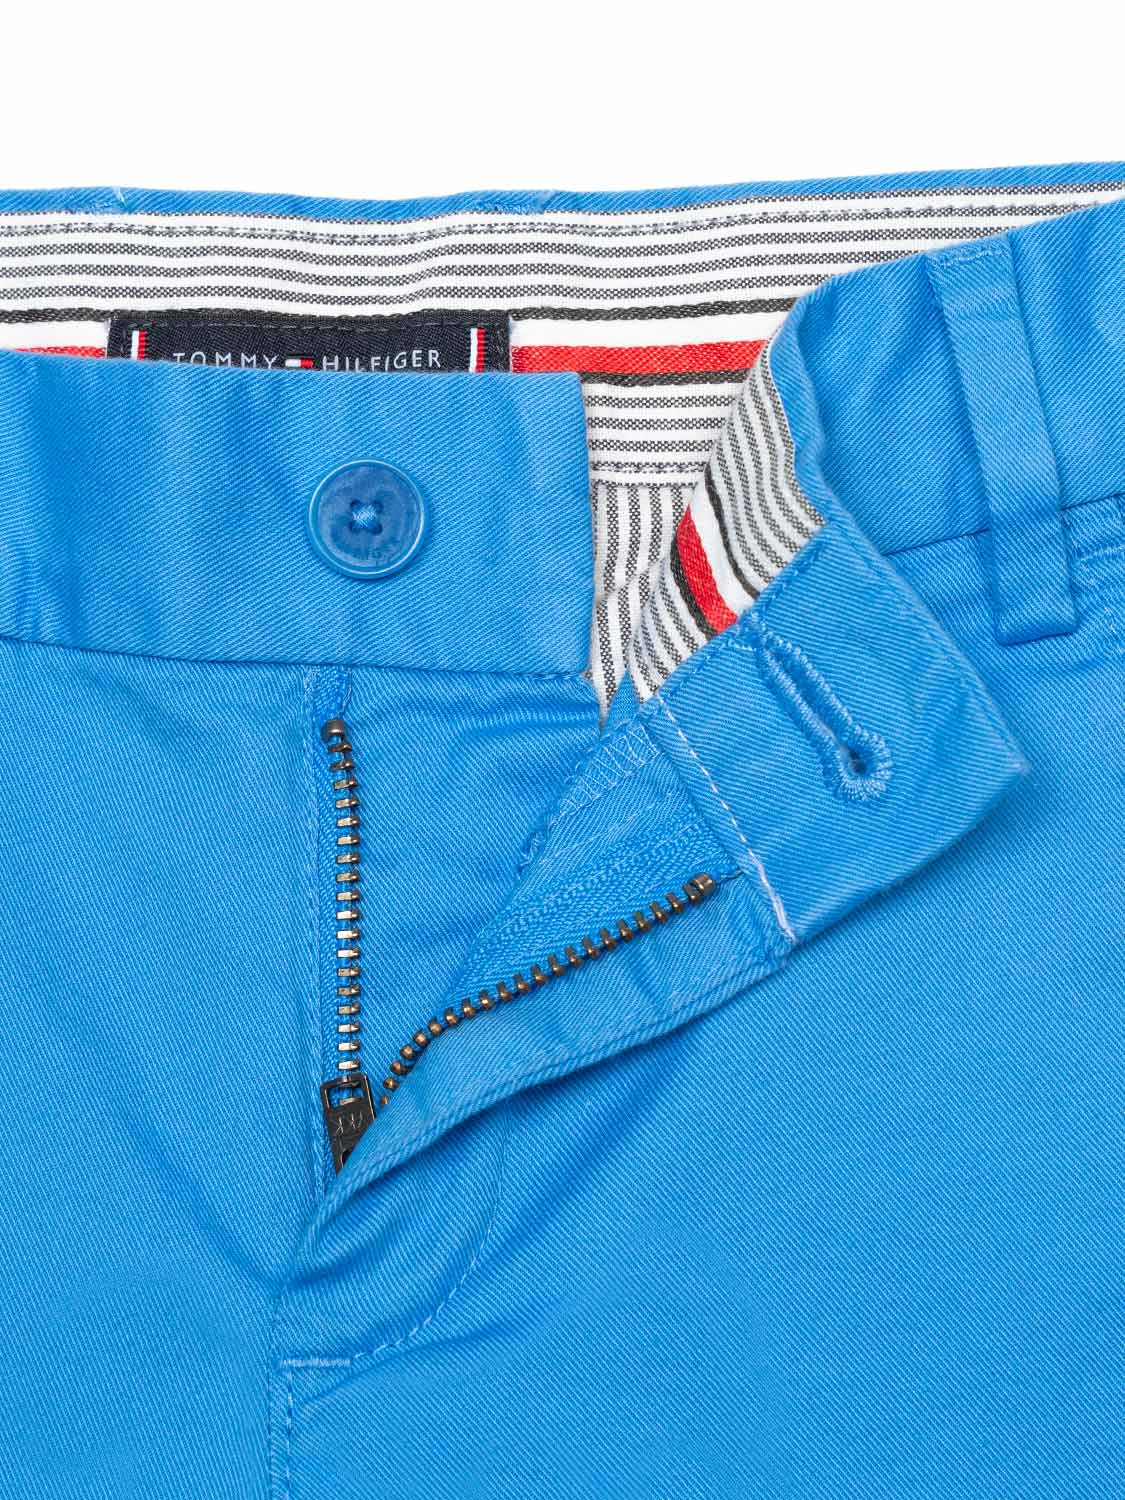 Essential 1985 Chino Shorts - Breezy Blue